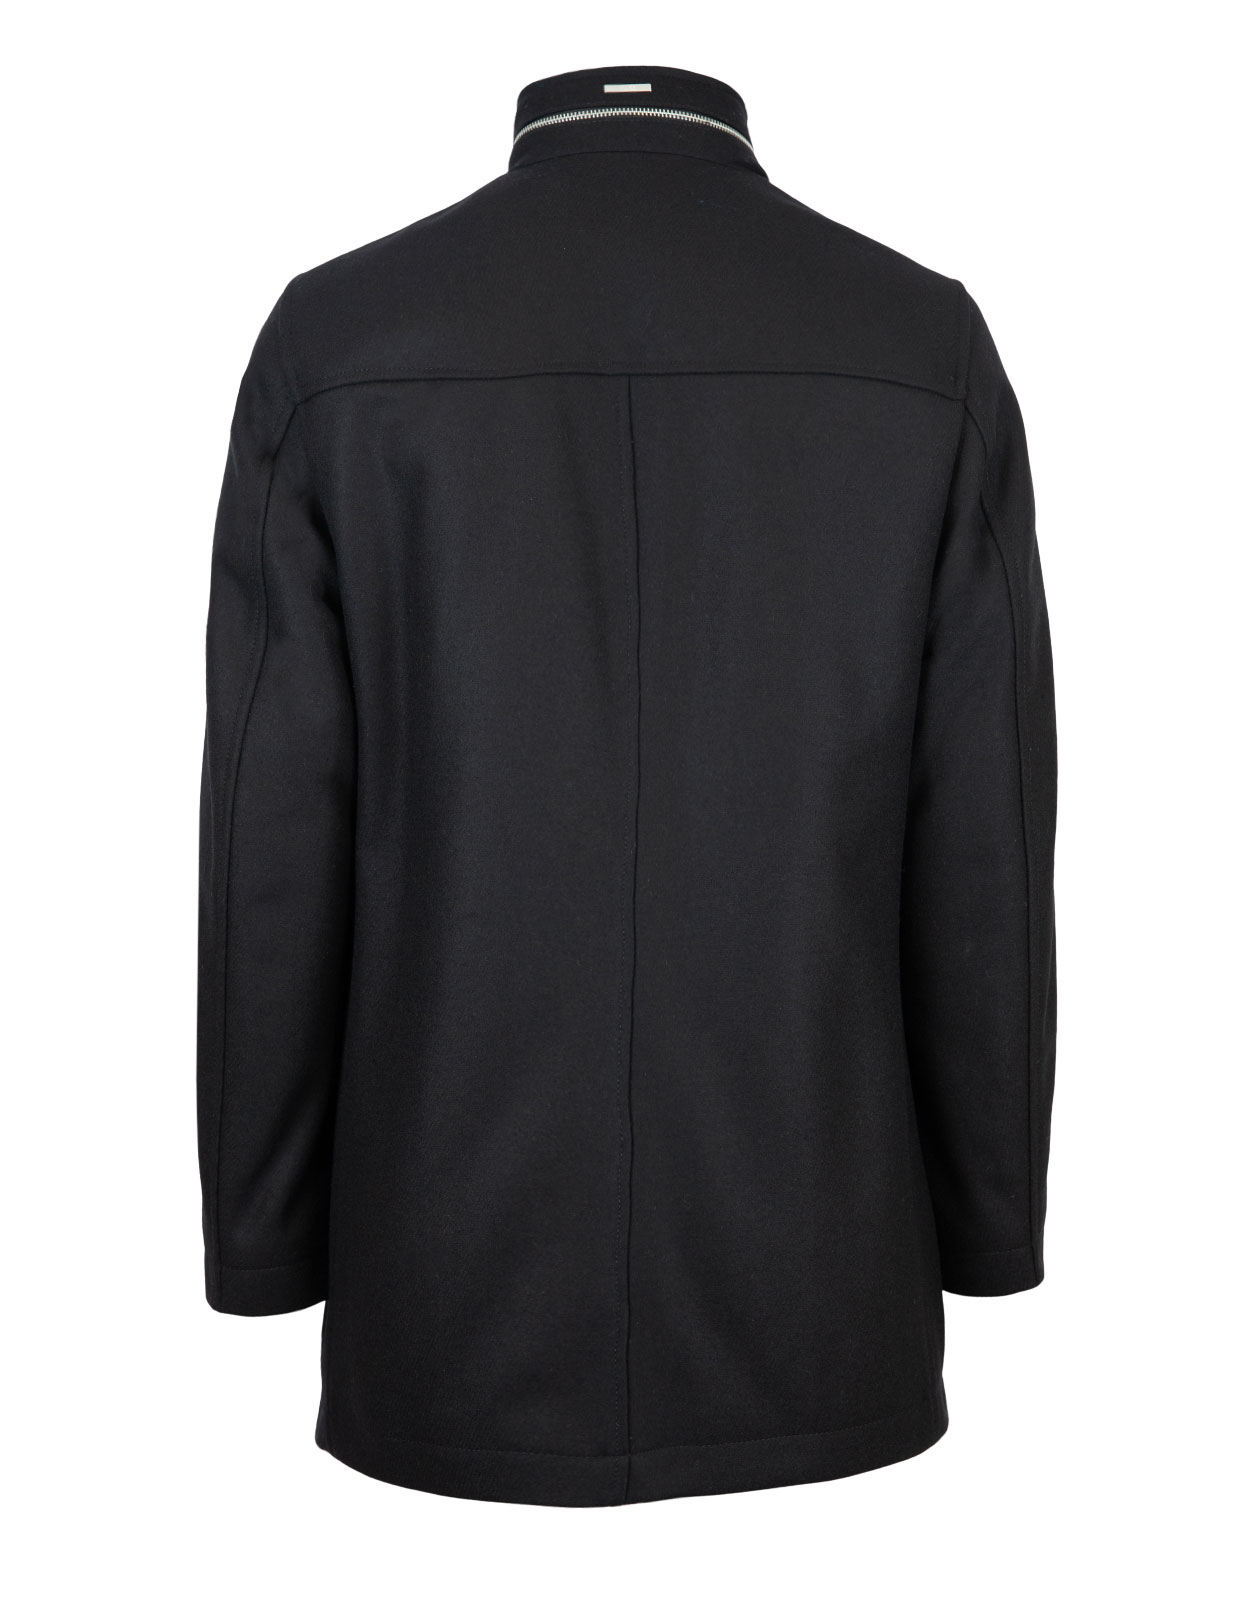 Camron4 Jacket Regular Fit Wool Blend Black